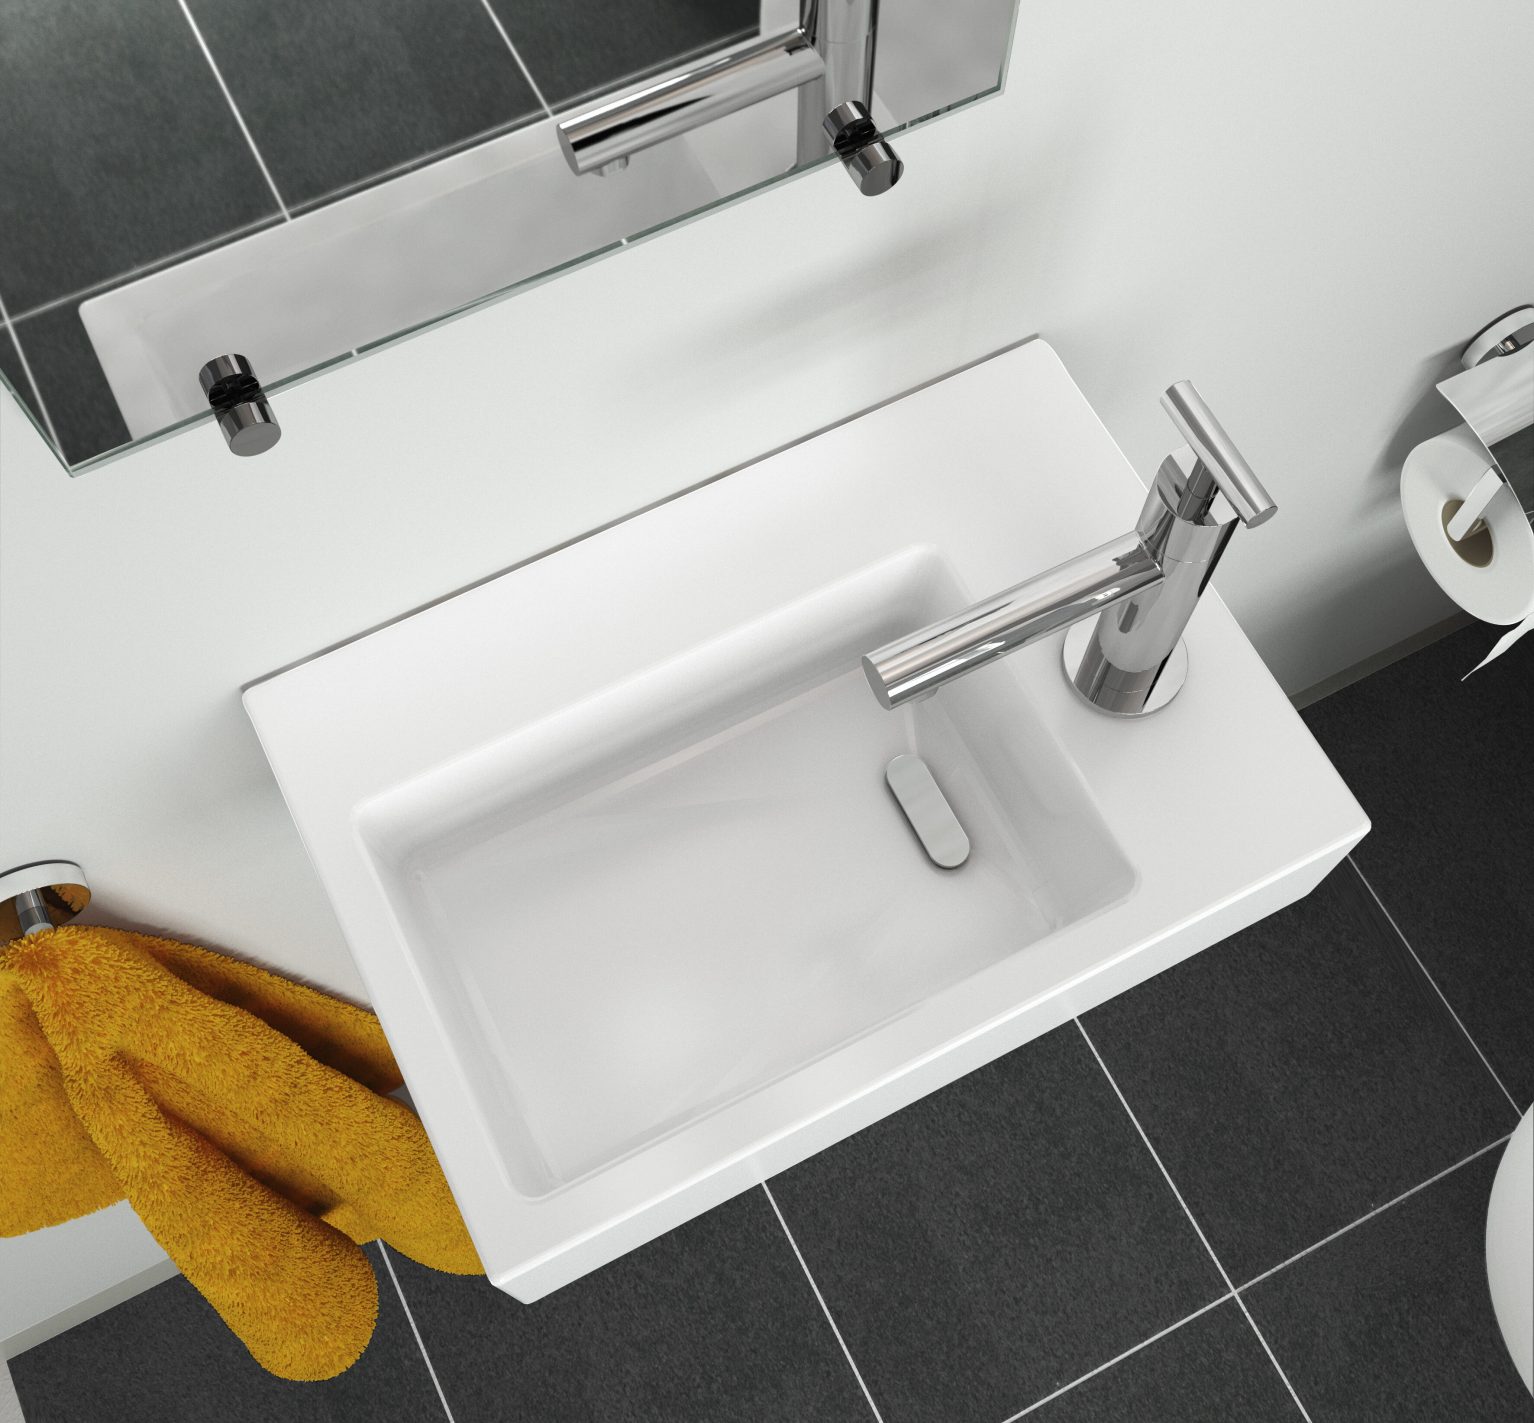 wastafel-kranen-chroom-toilet-badkamer-luxe-sanitair-Freddo-4-clou-CL060301229-fontein-kraan